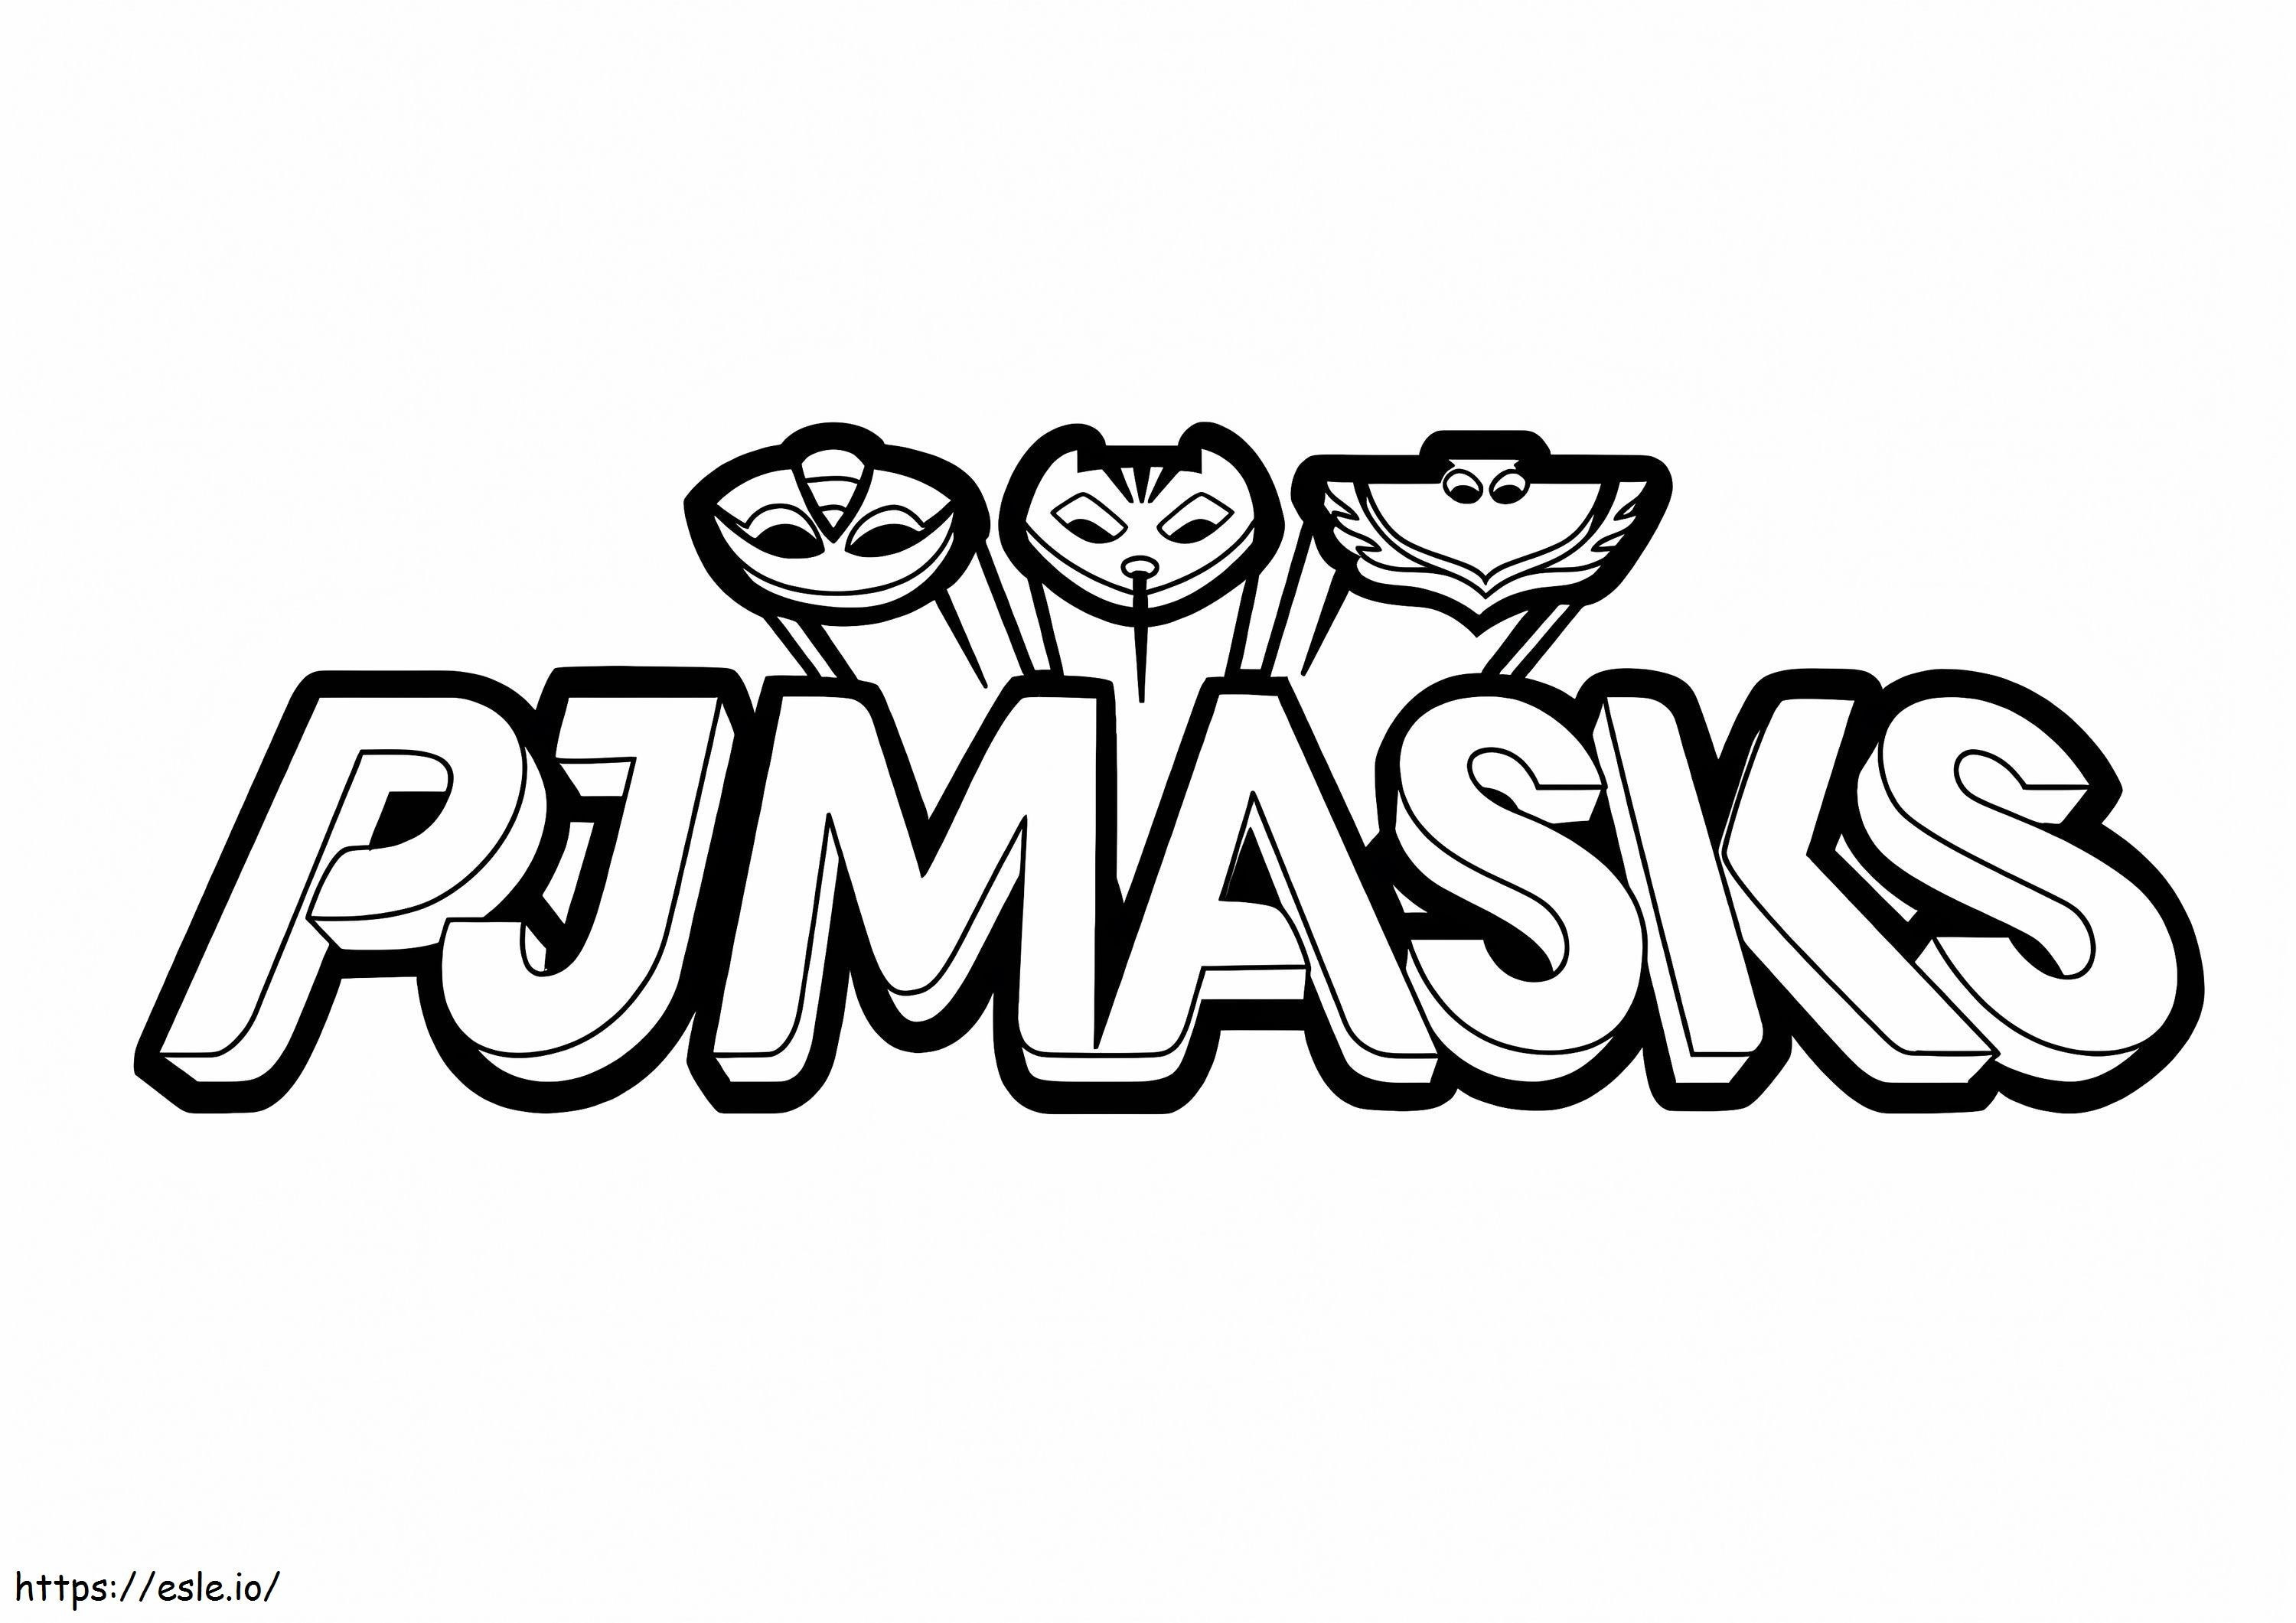 PJ Masks-Logo ausmalbilder